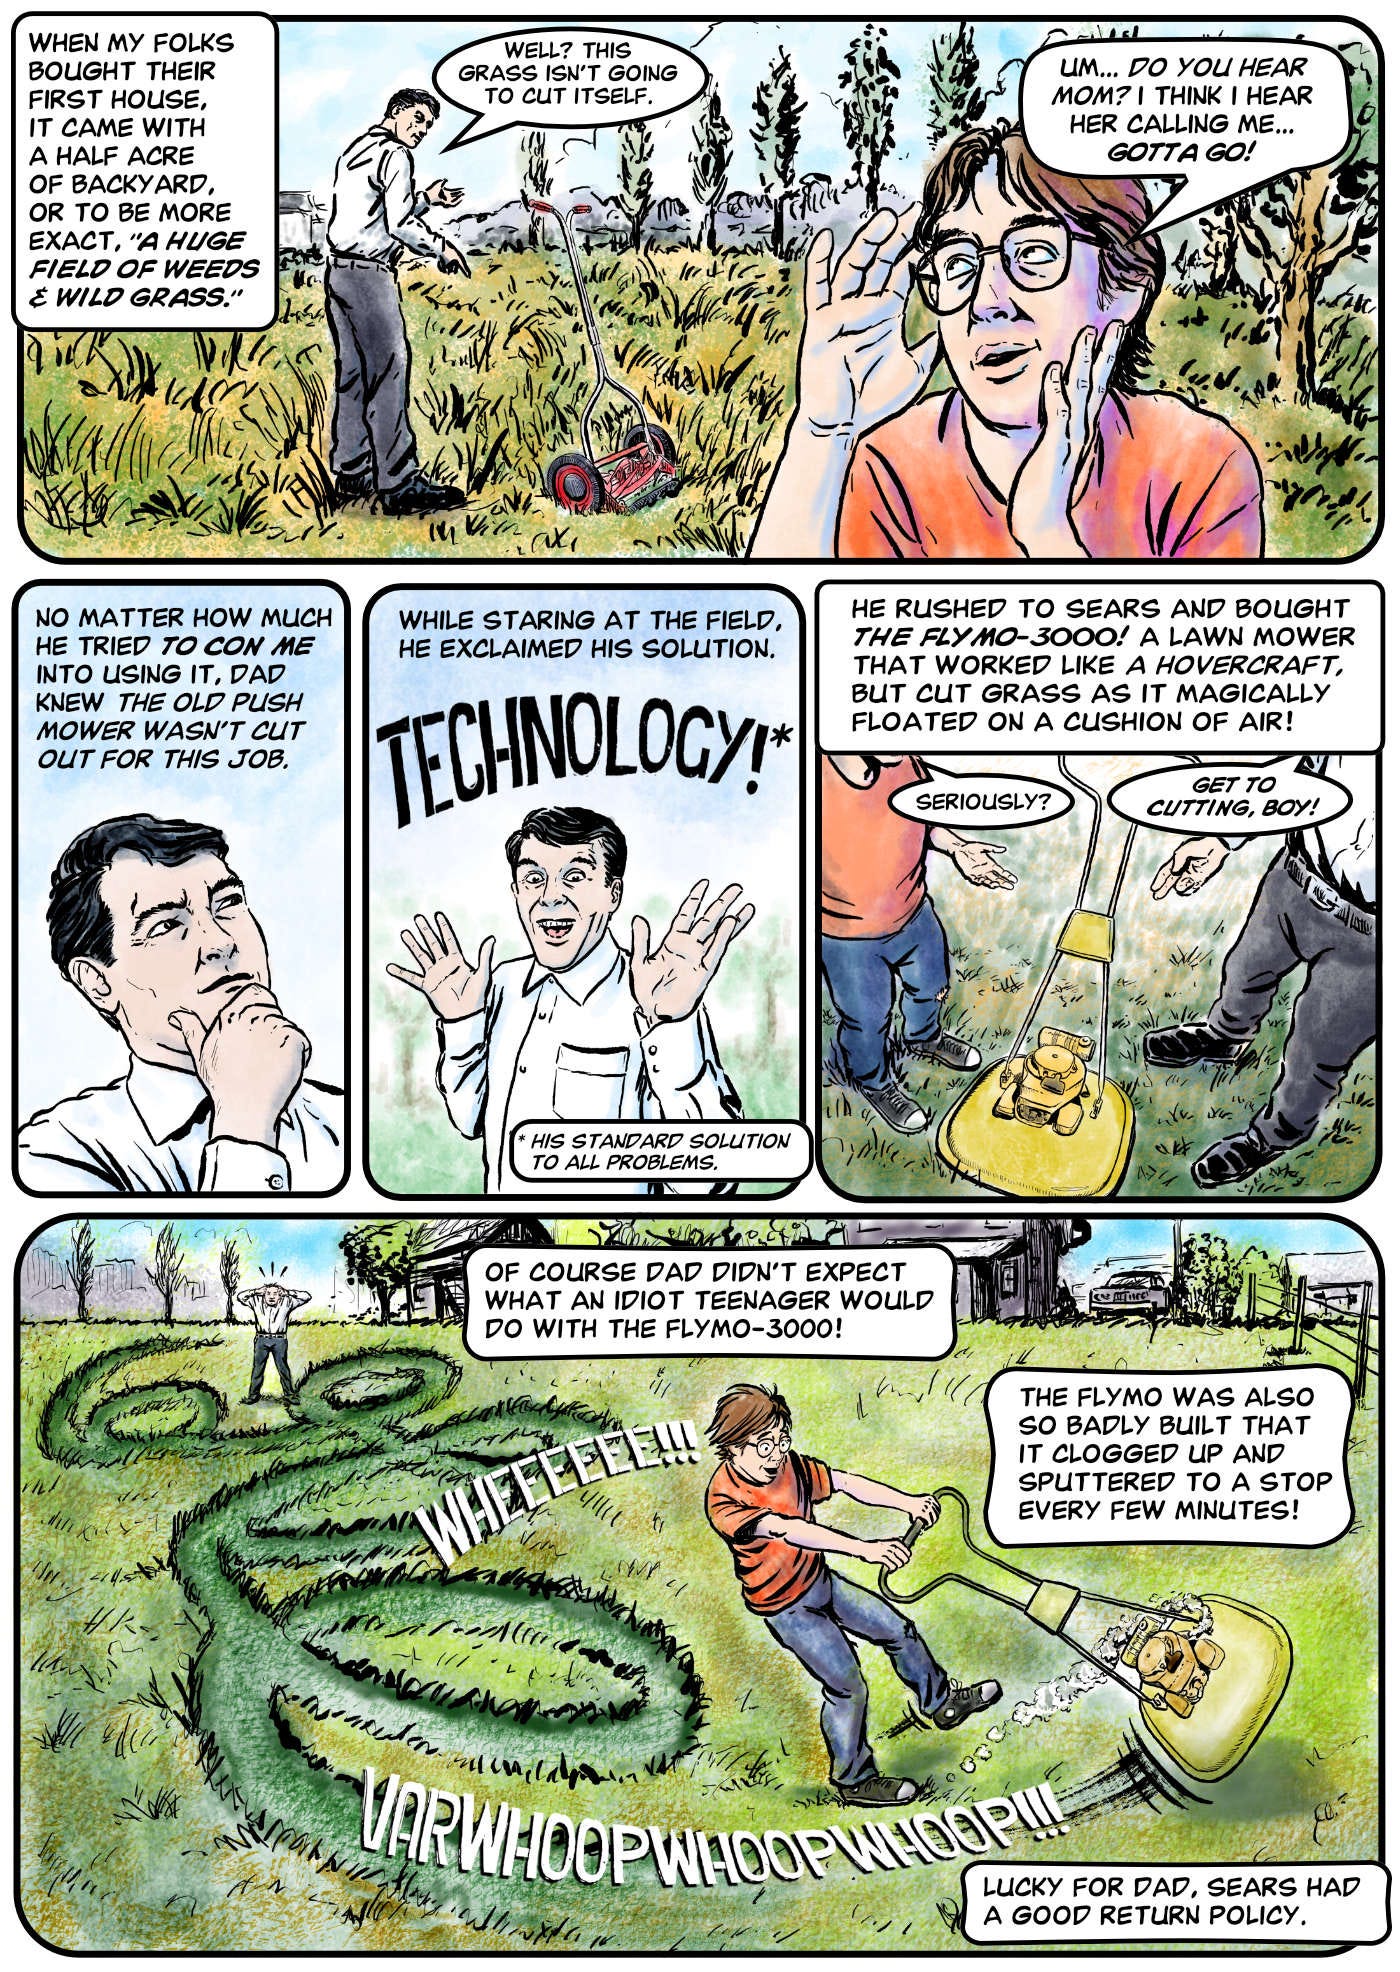 LawnMowingSeason Comicpage2 by ERFlynn